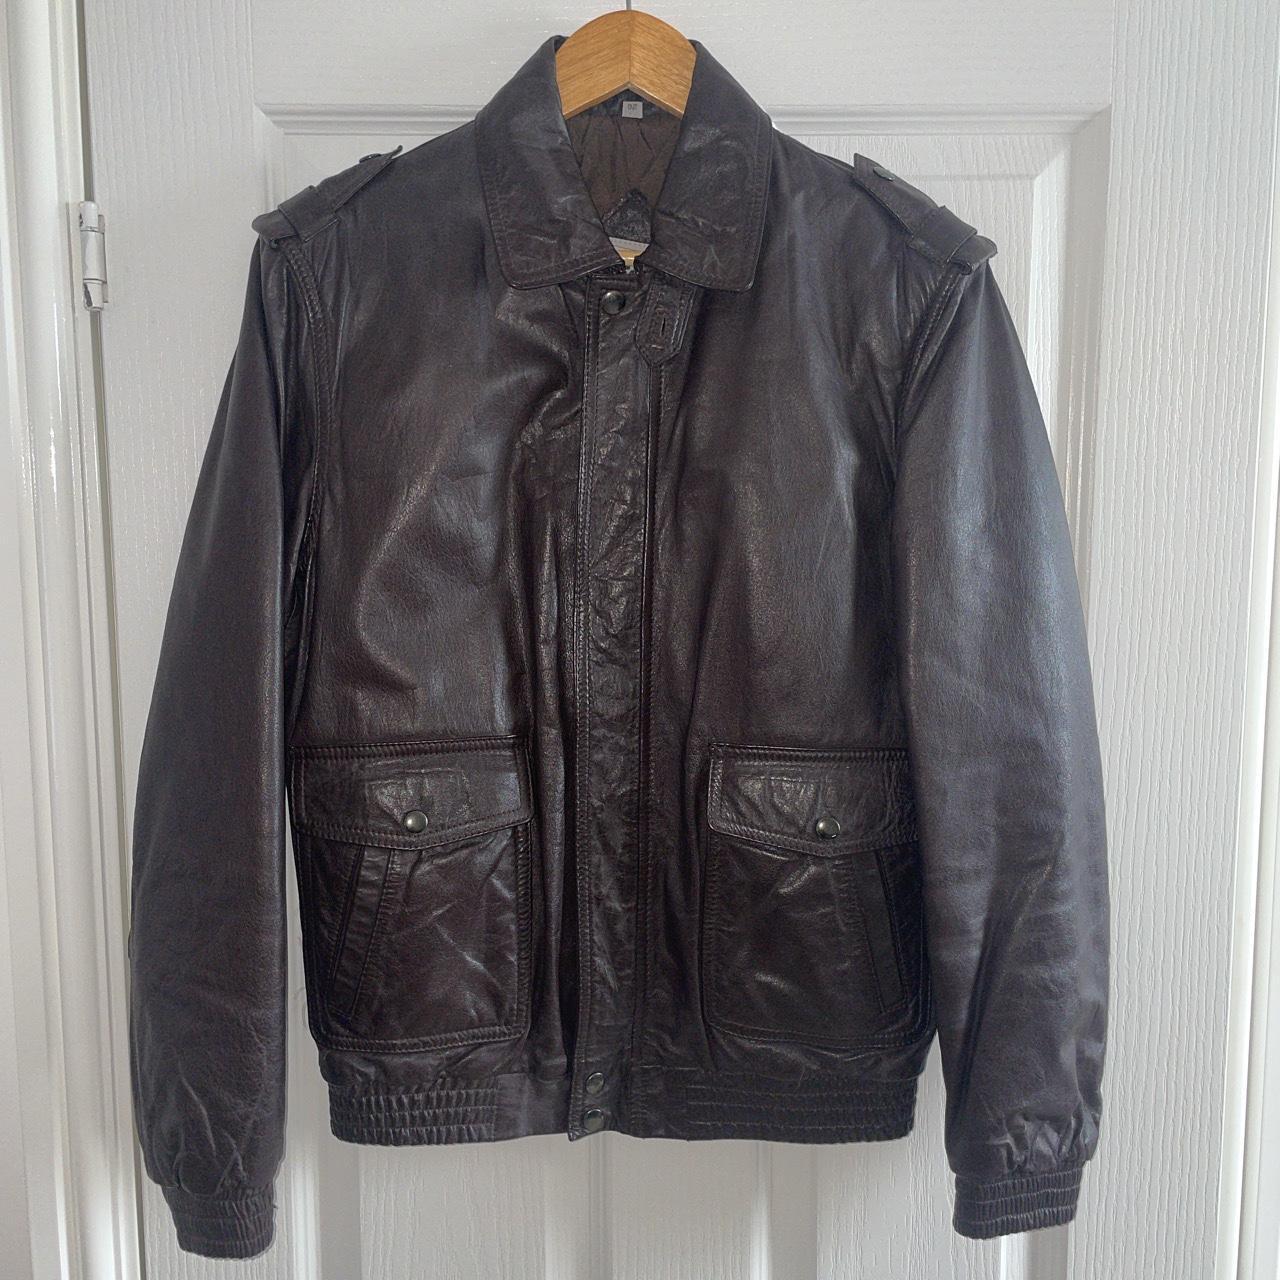 First Quality Clothing Vintage Leather Jacket Mens... - Depop